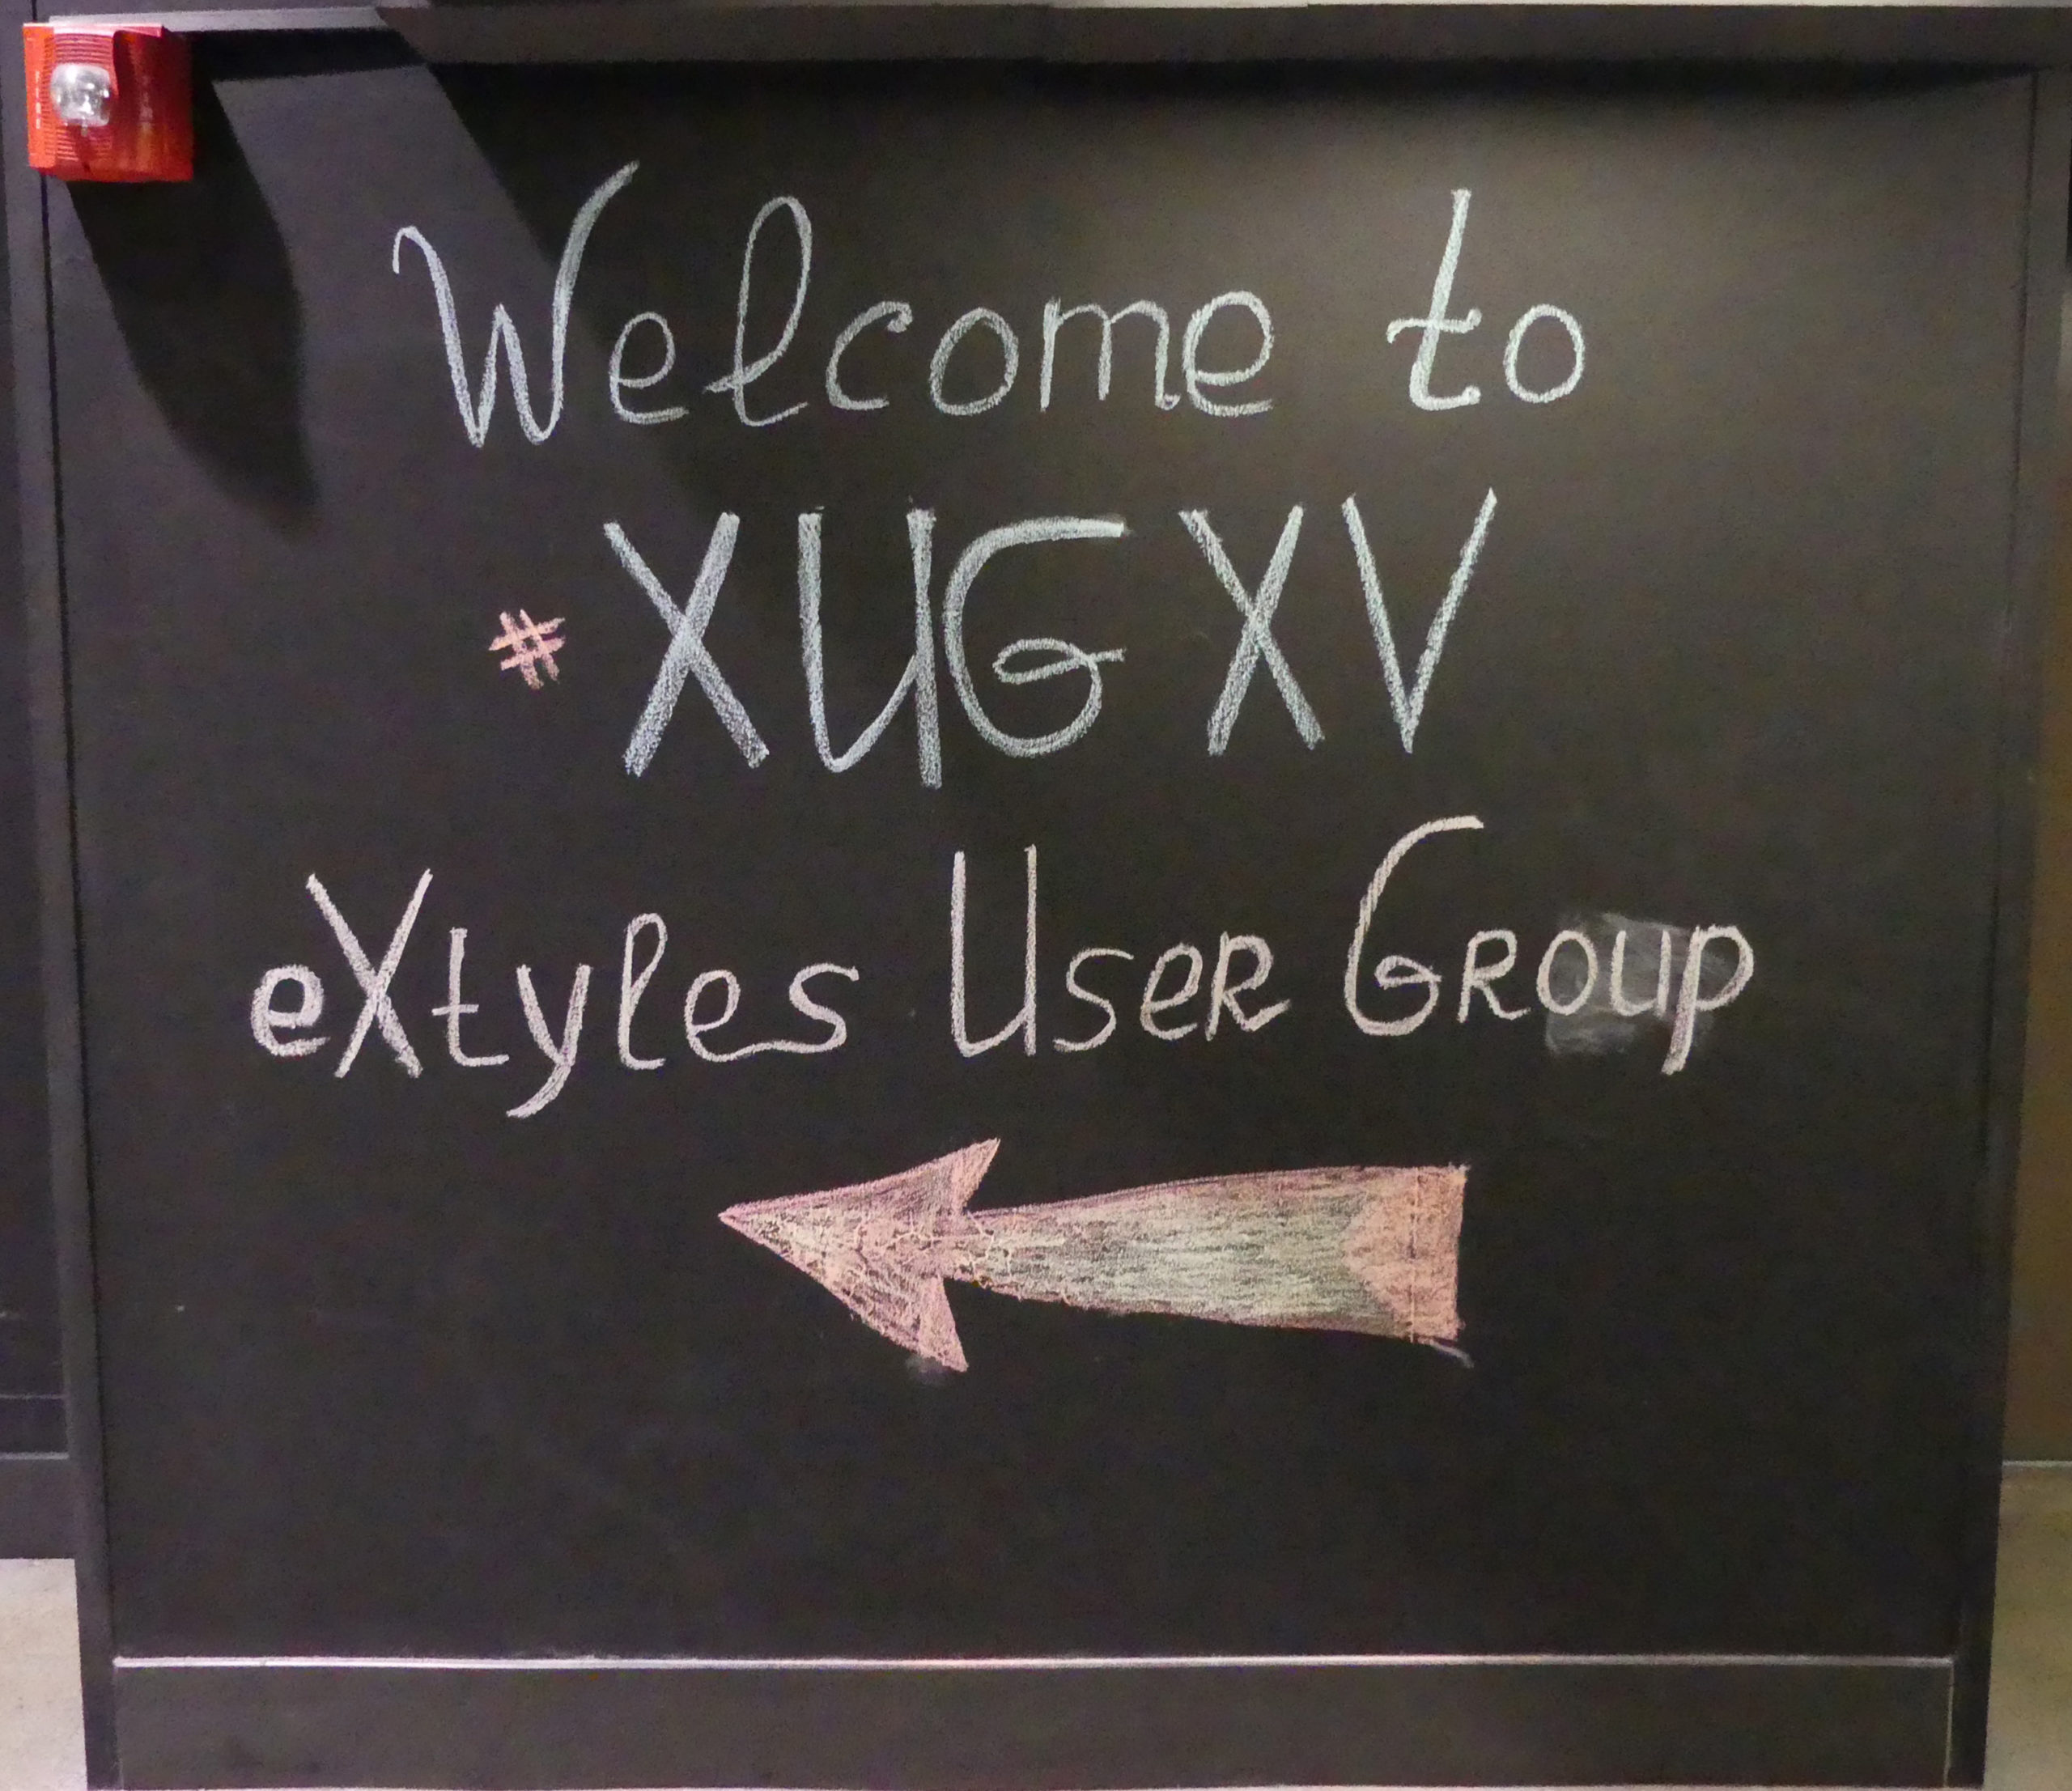 Chalkboard wall art reading "Welcome to XUGXV"